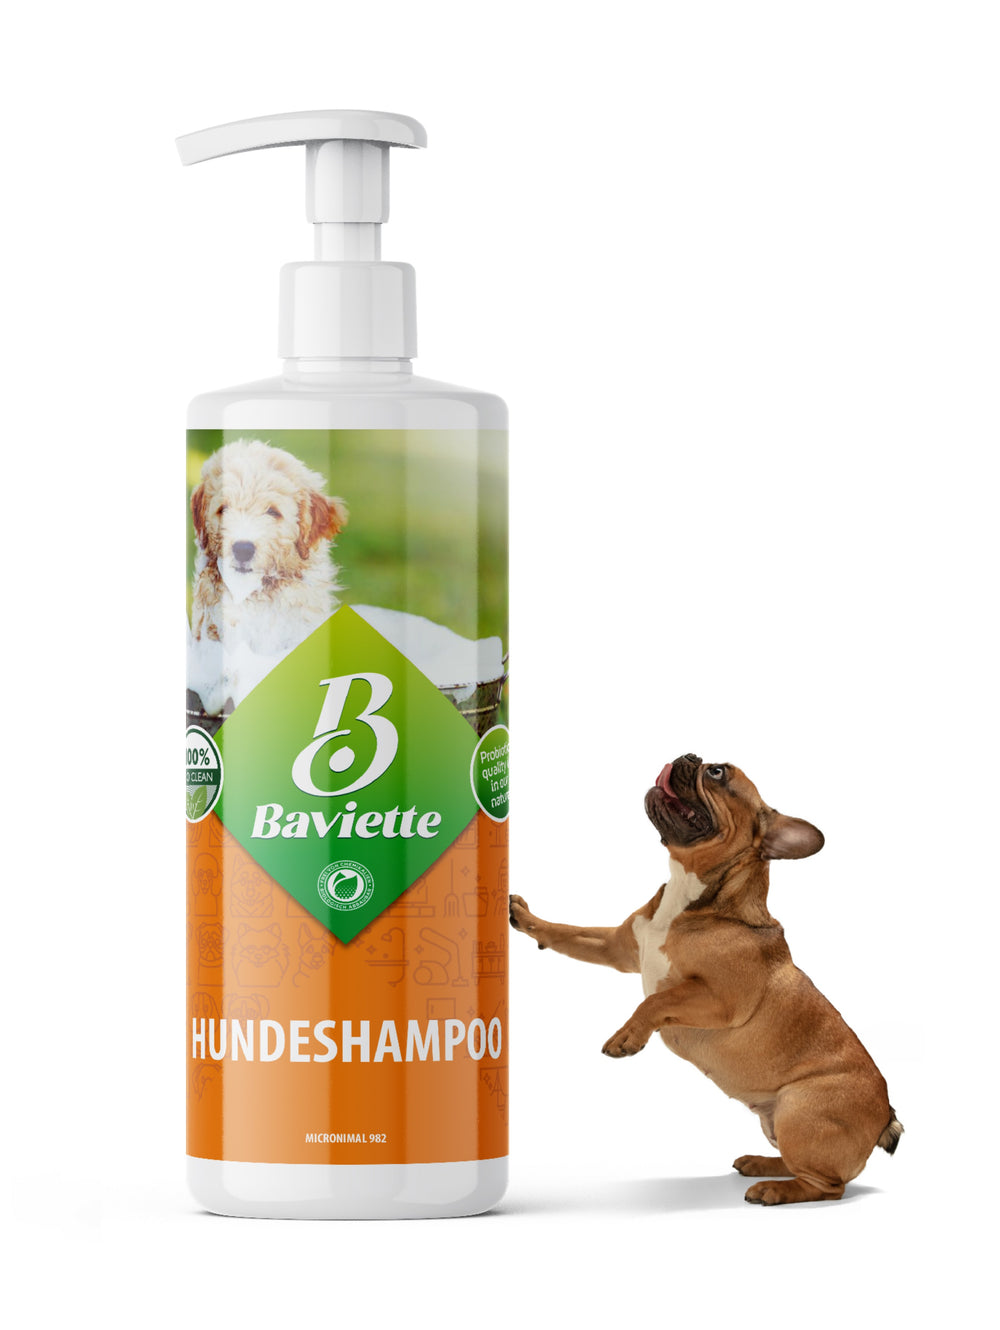 Dog shampoo